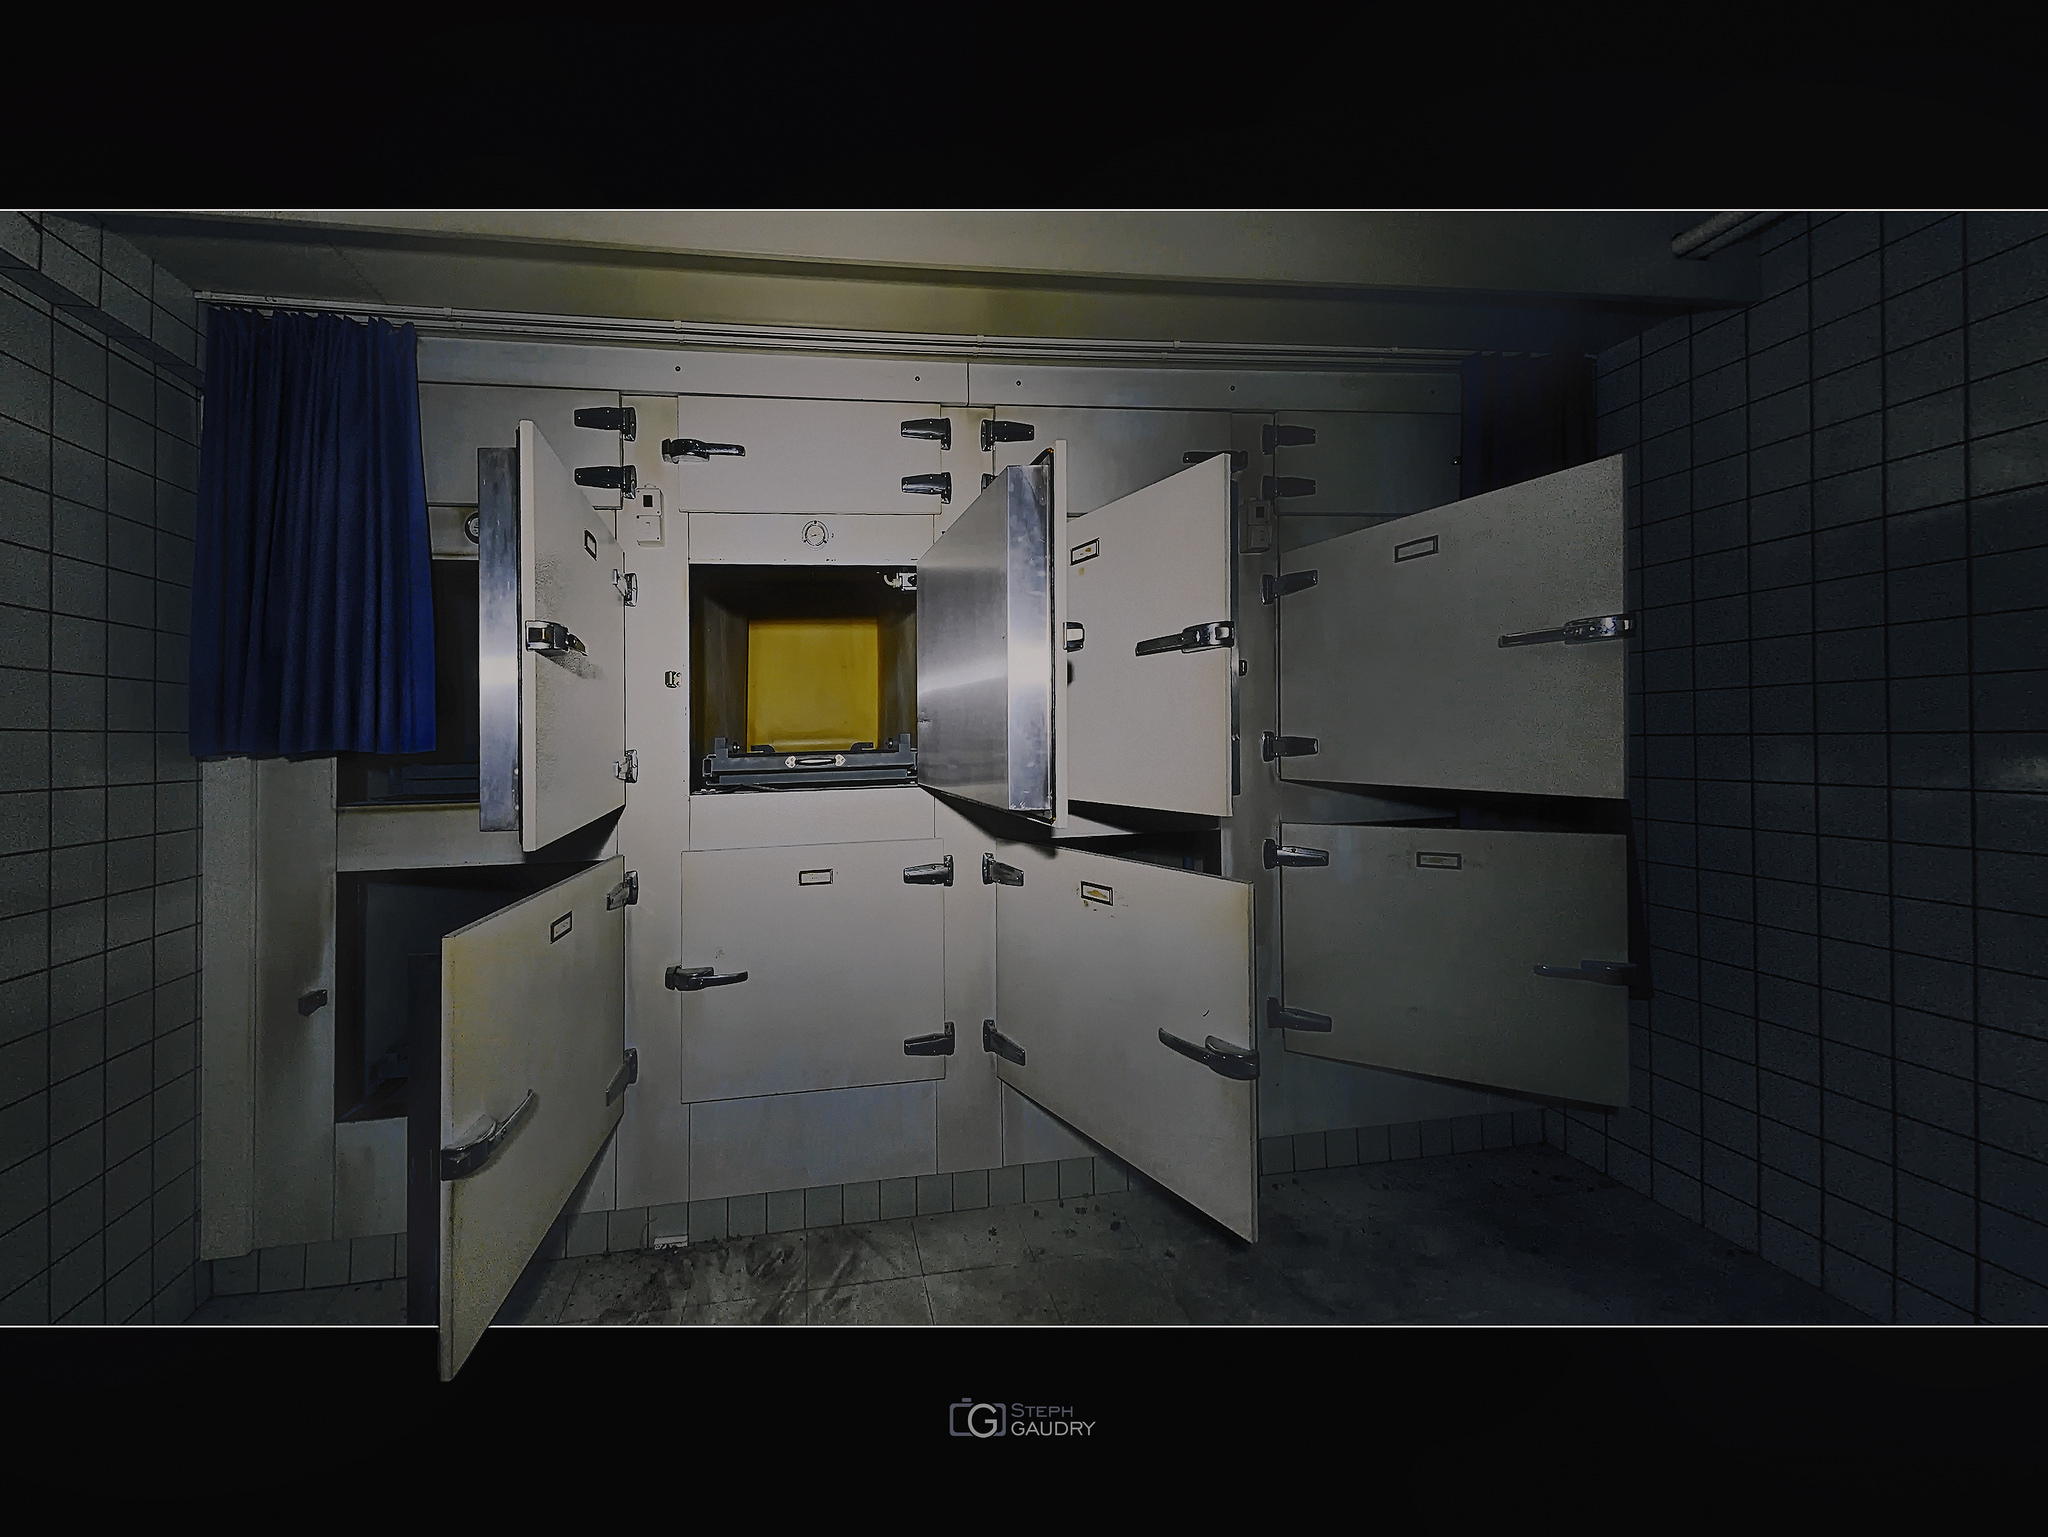 La morgue [Click to start slideshow]